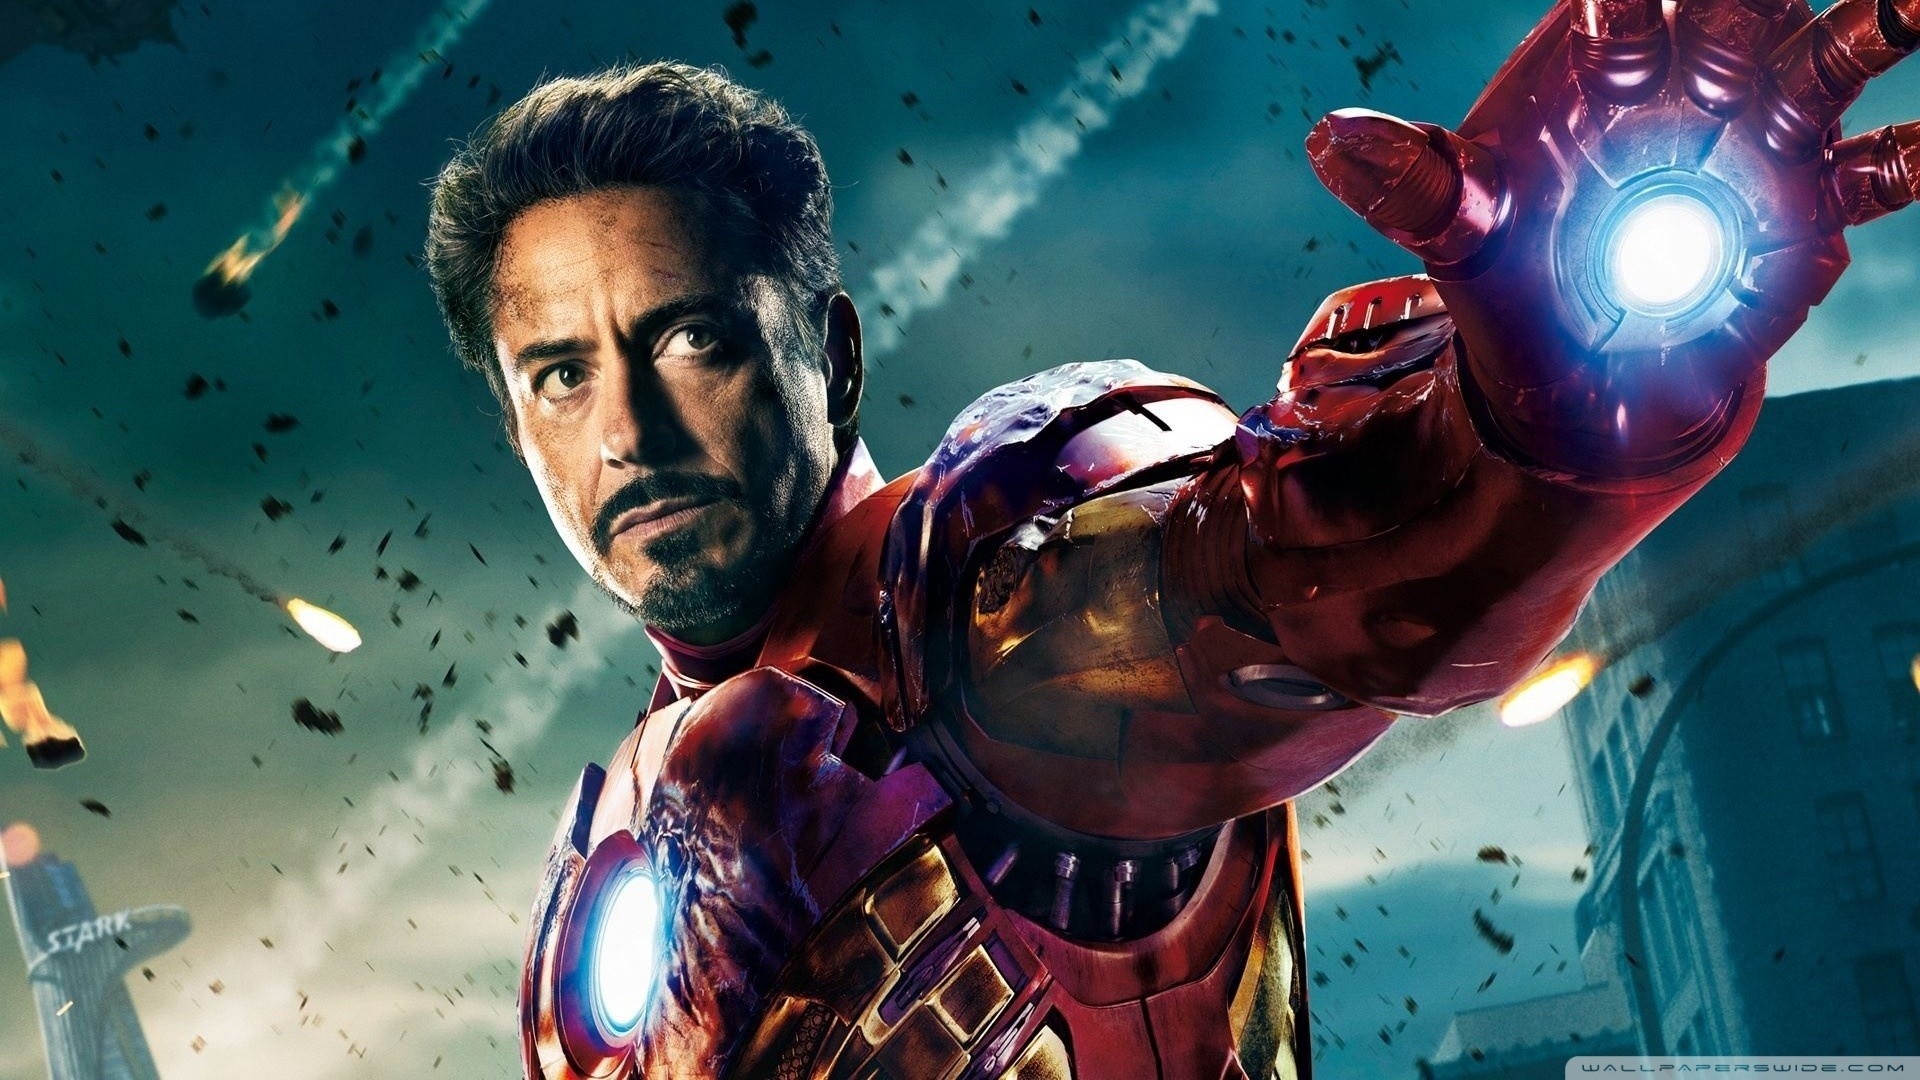 General 1920x1080 movies The Avengers Iron Man Robert Downey Jr. Tony Stark Marvel Cinematic Universe actor superhero Marvel Comics